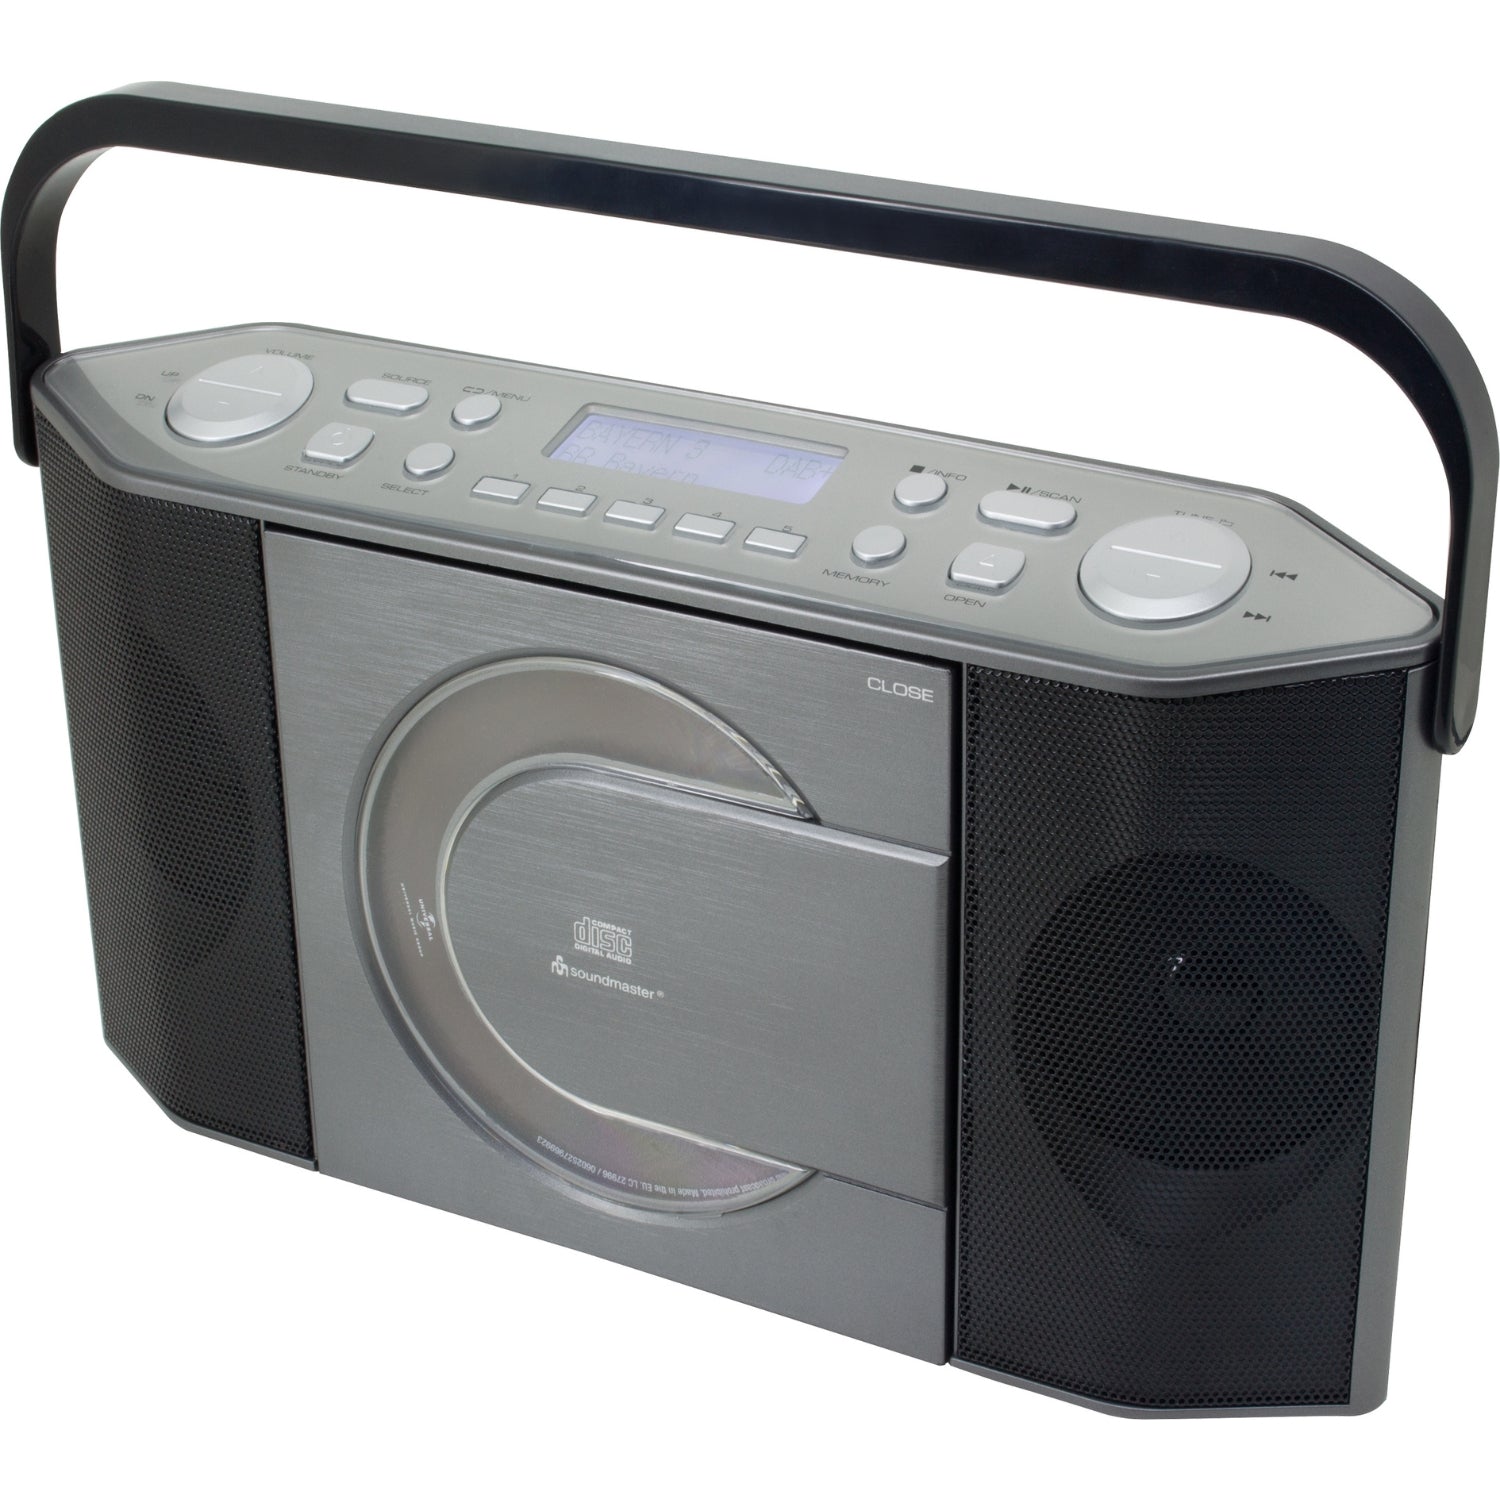 Soundmaster RCD1770AN tragbares Digitalradio CD-Player DAB+ USB MP3 Kopfhöreranschluss Uhr